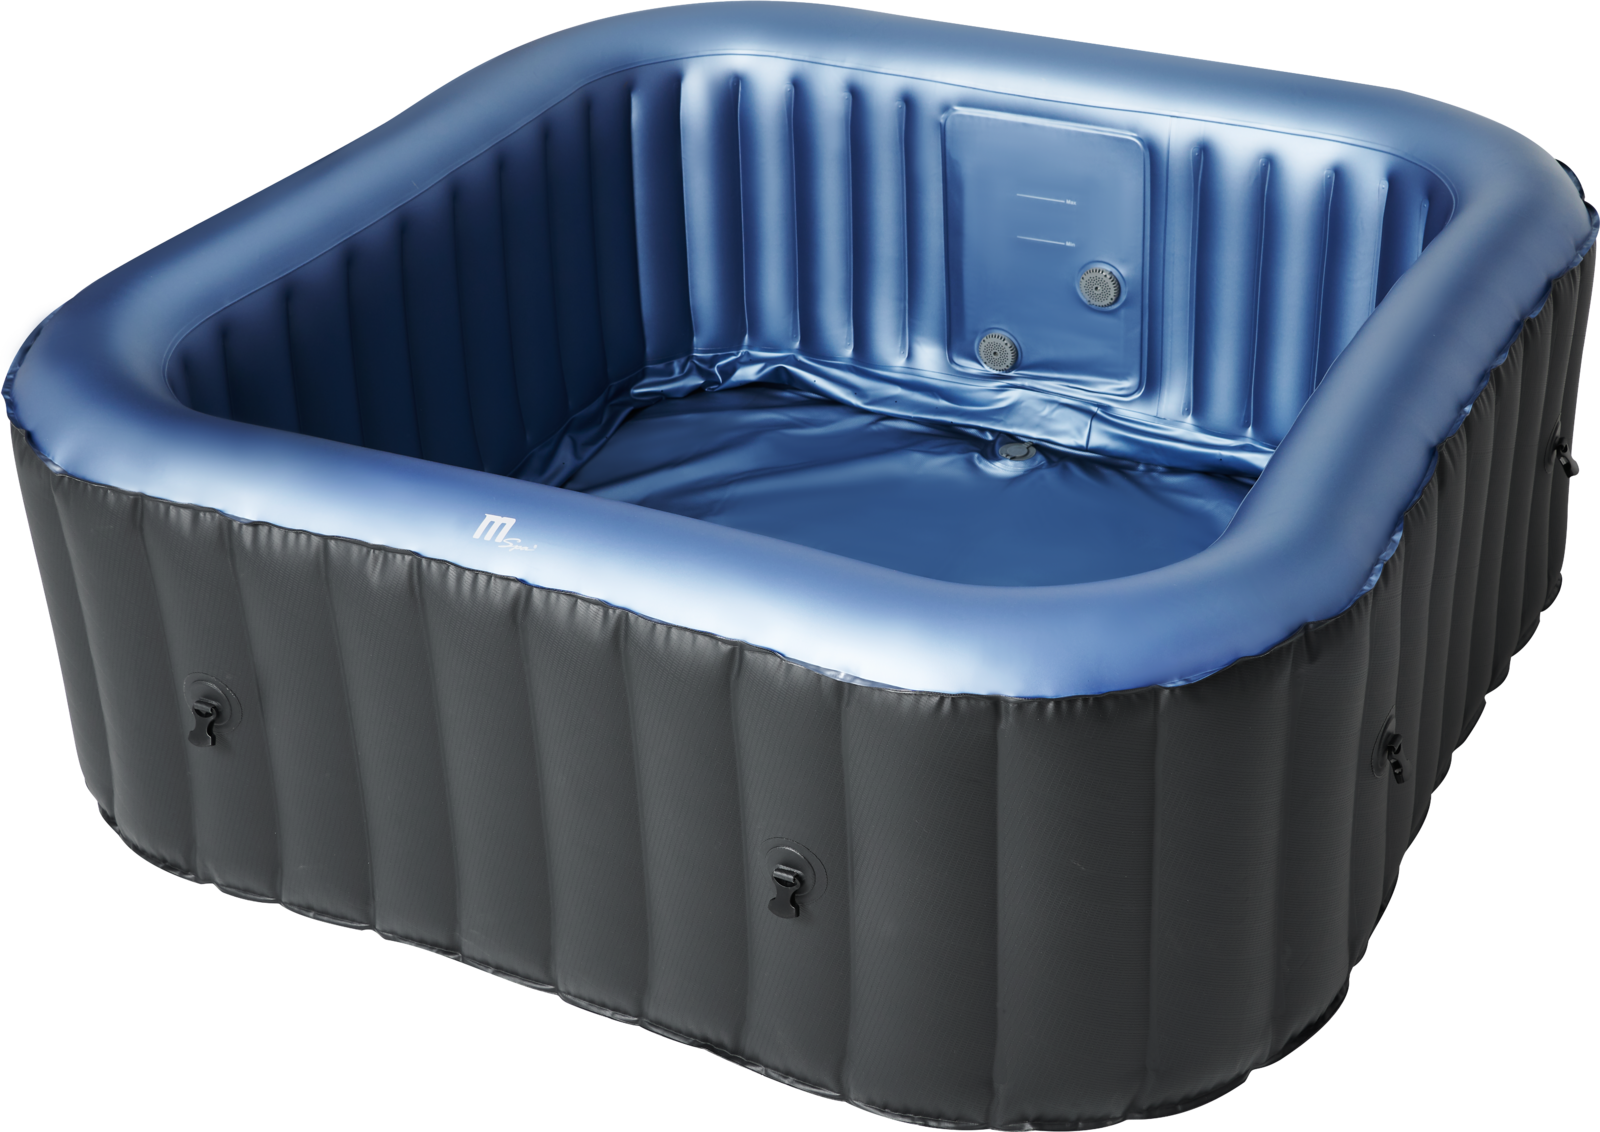 Ultimate Relaxation: MSPA Tekapo Inflatable Hot Tub for 6